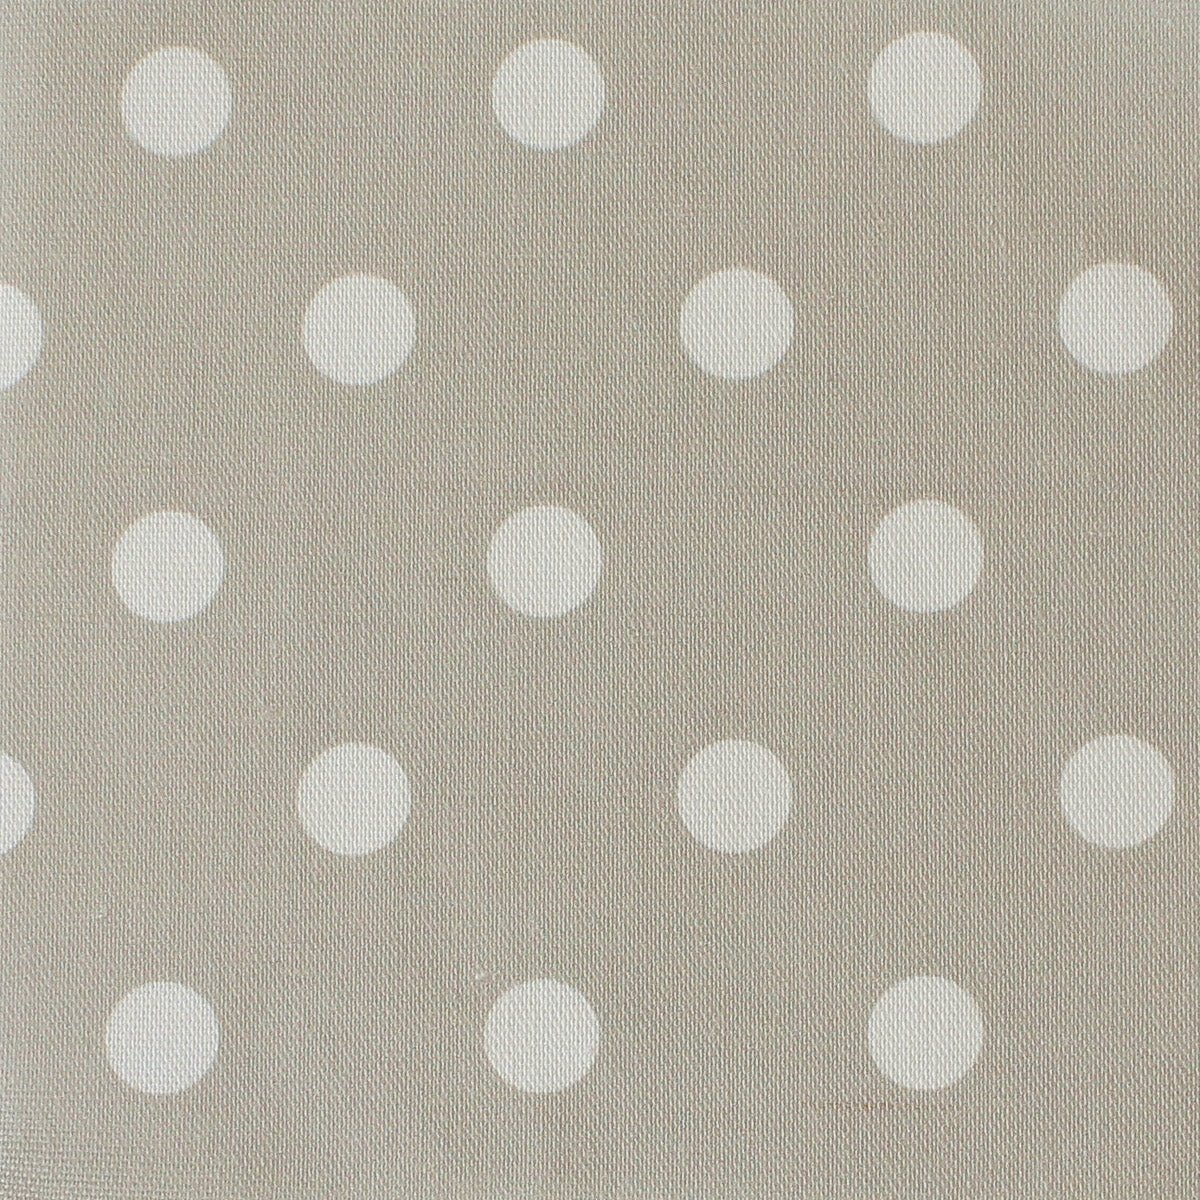 Spotty Day Reverse Fabric - Linen - Hydrangea Lane Home